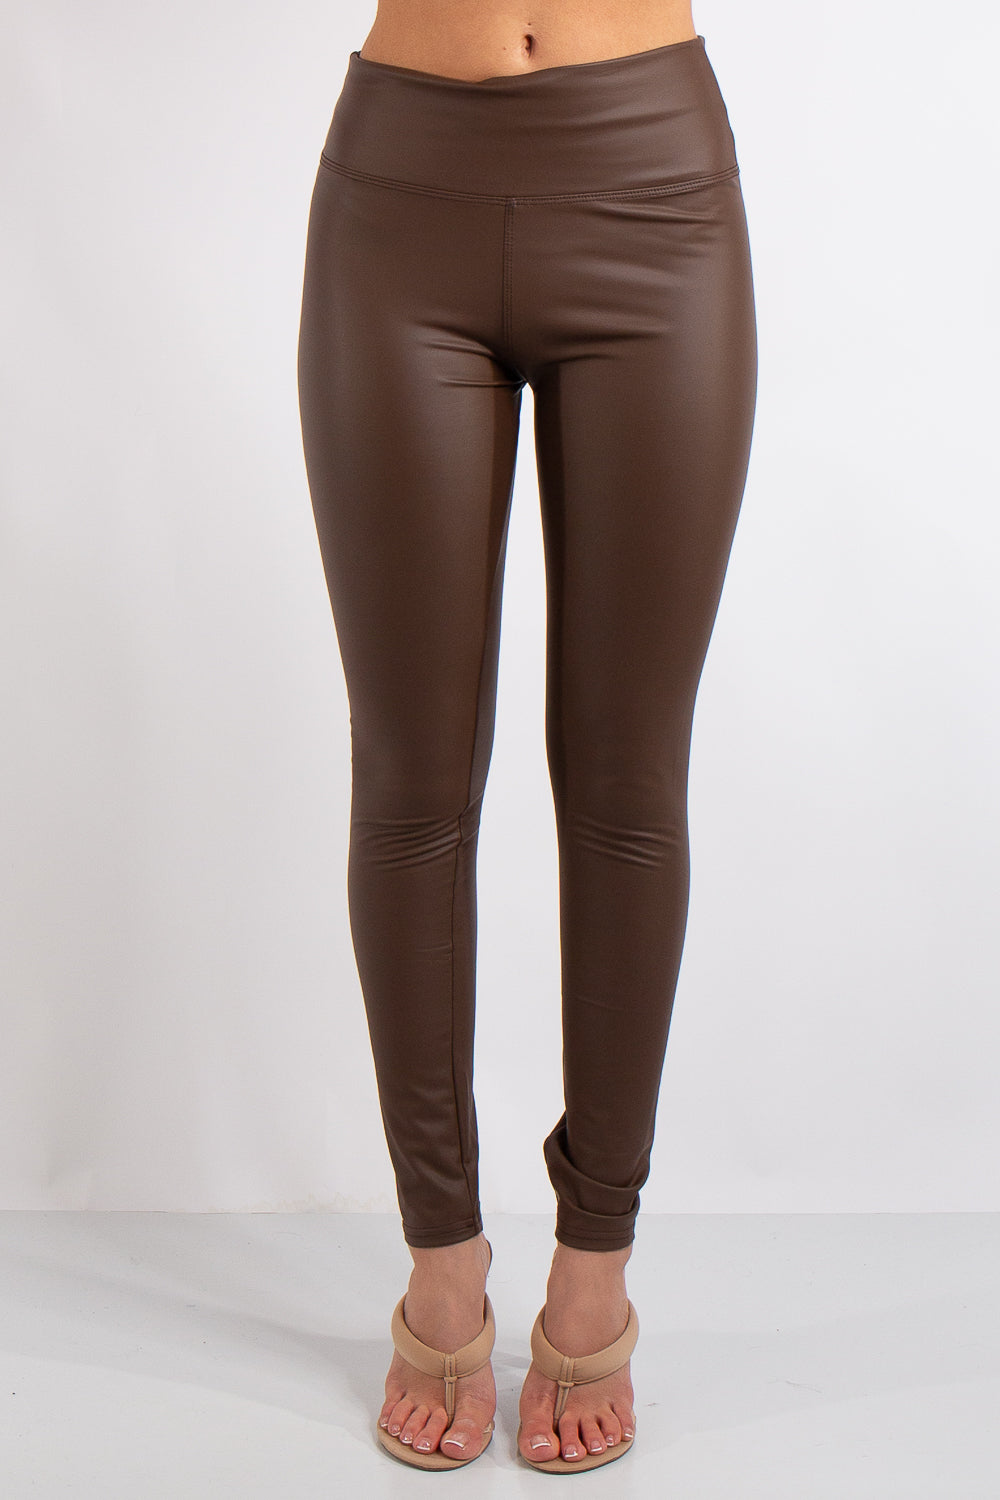 Flex Ultra High Waisted Leggings - Chocolate Brown - Gorjessfit